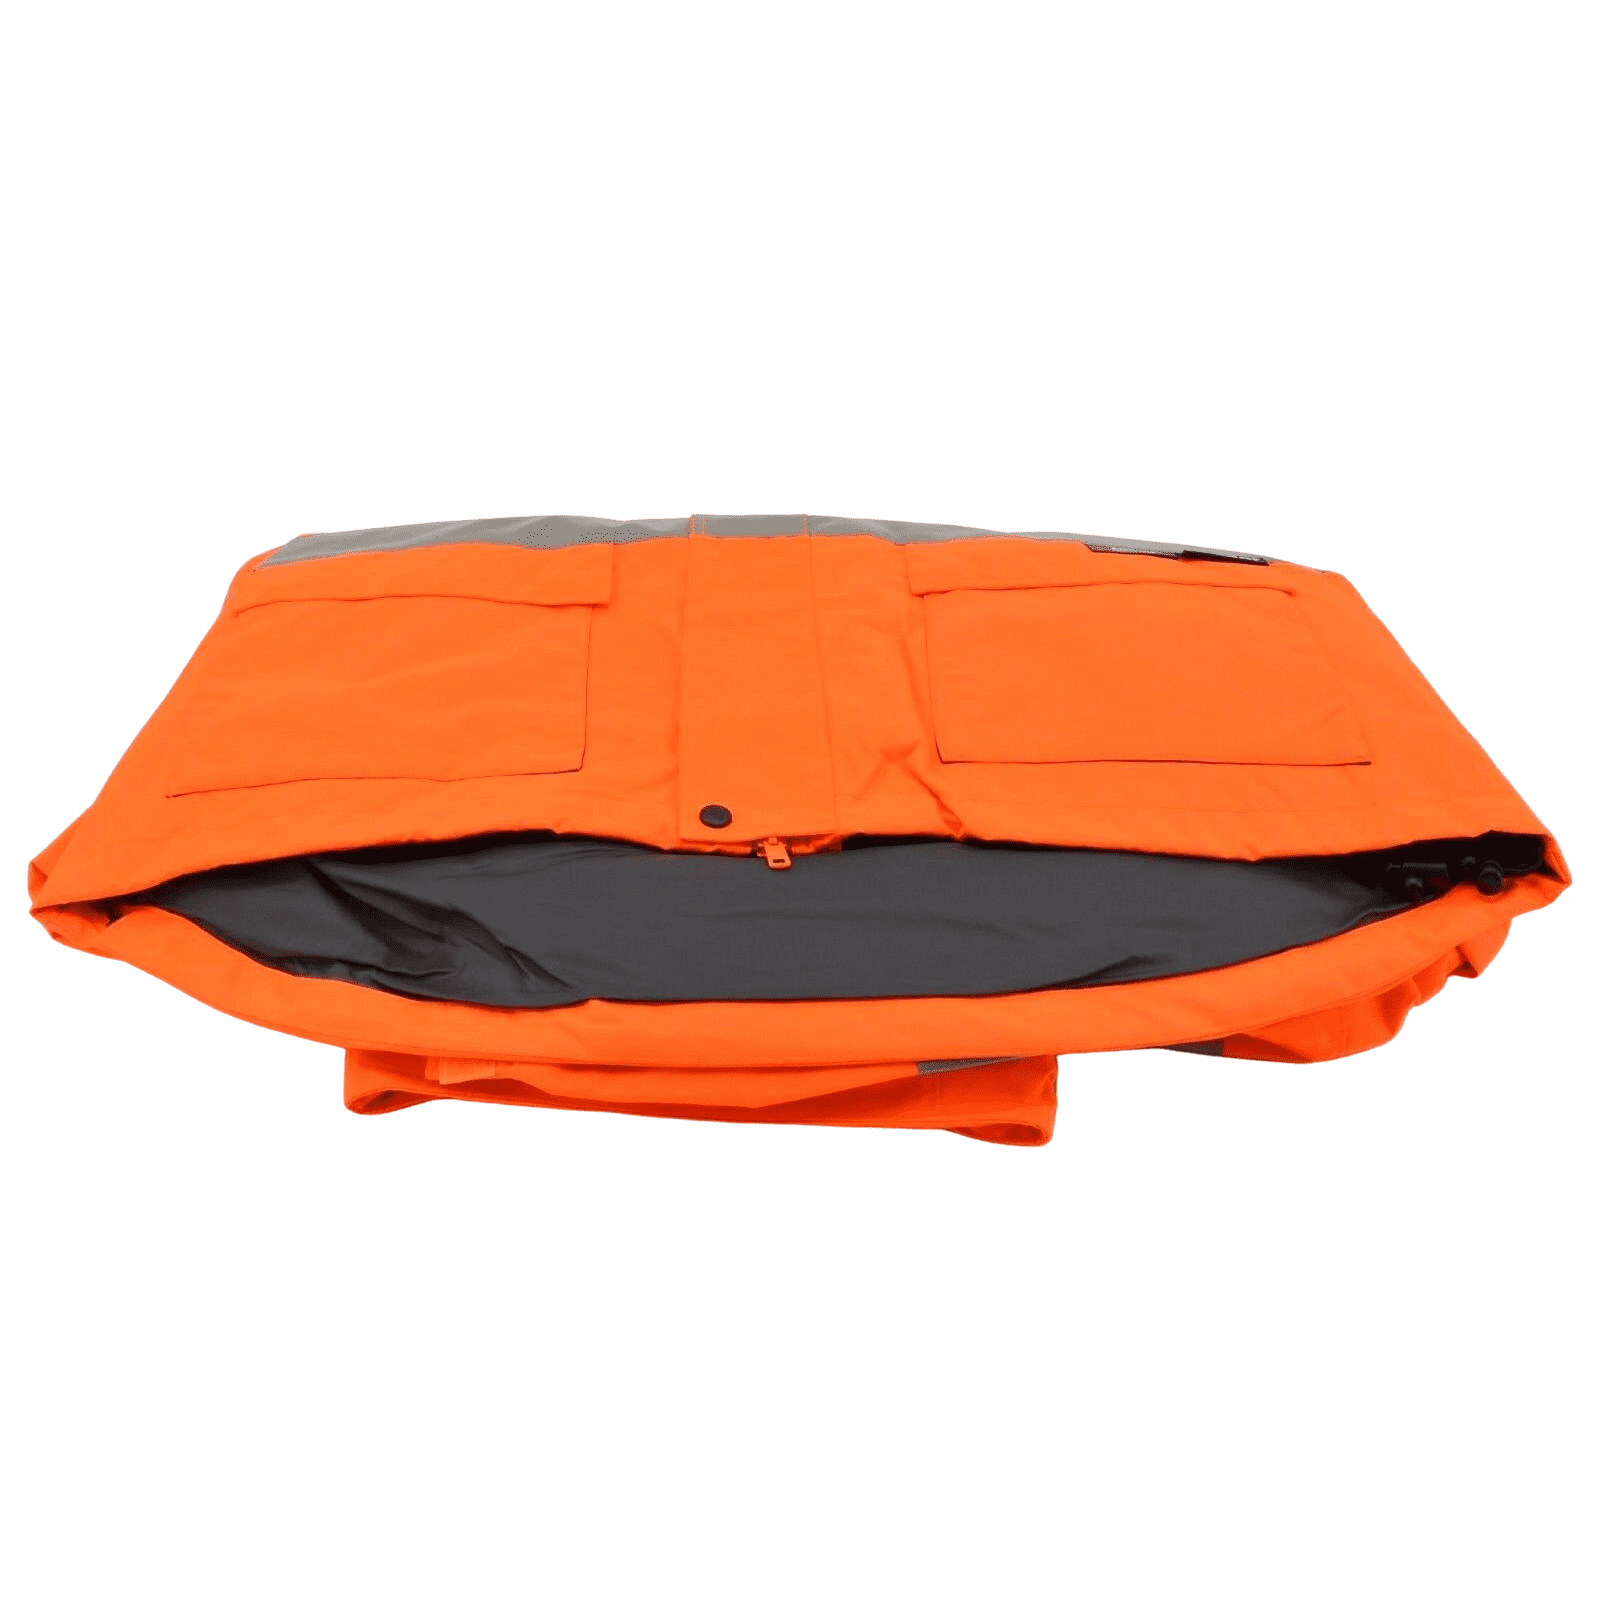 Men's Condor 3-in-1 Work jacket with safety Stripes in Hi-Vision Orange Size 3XL